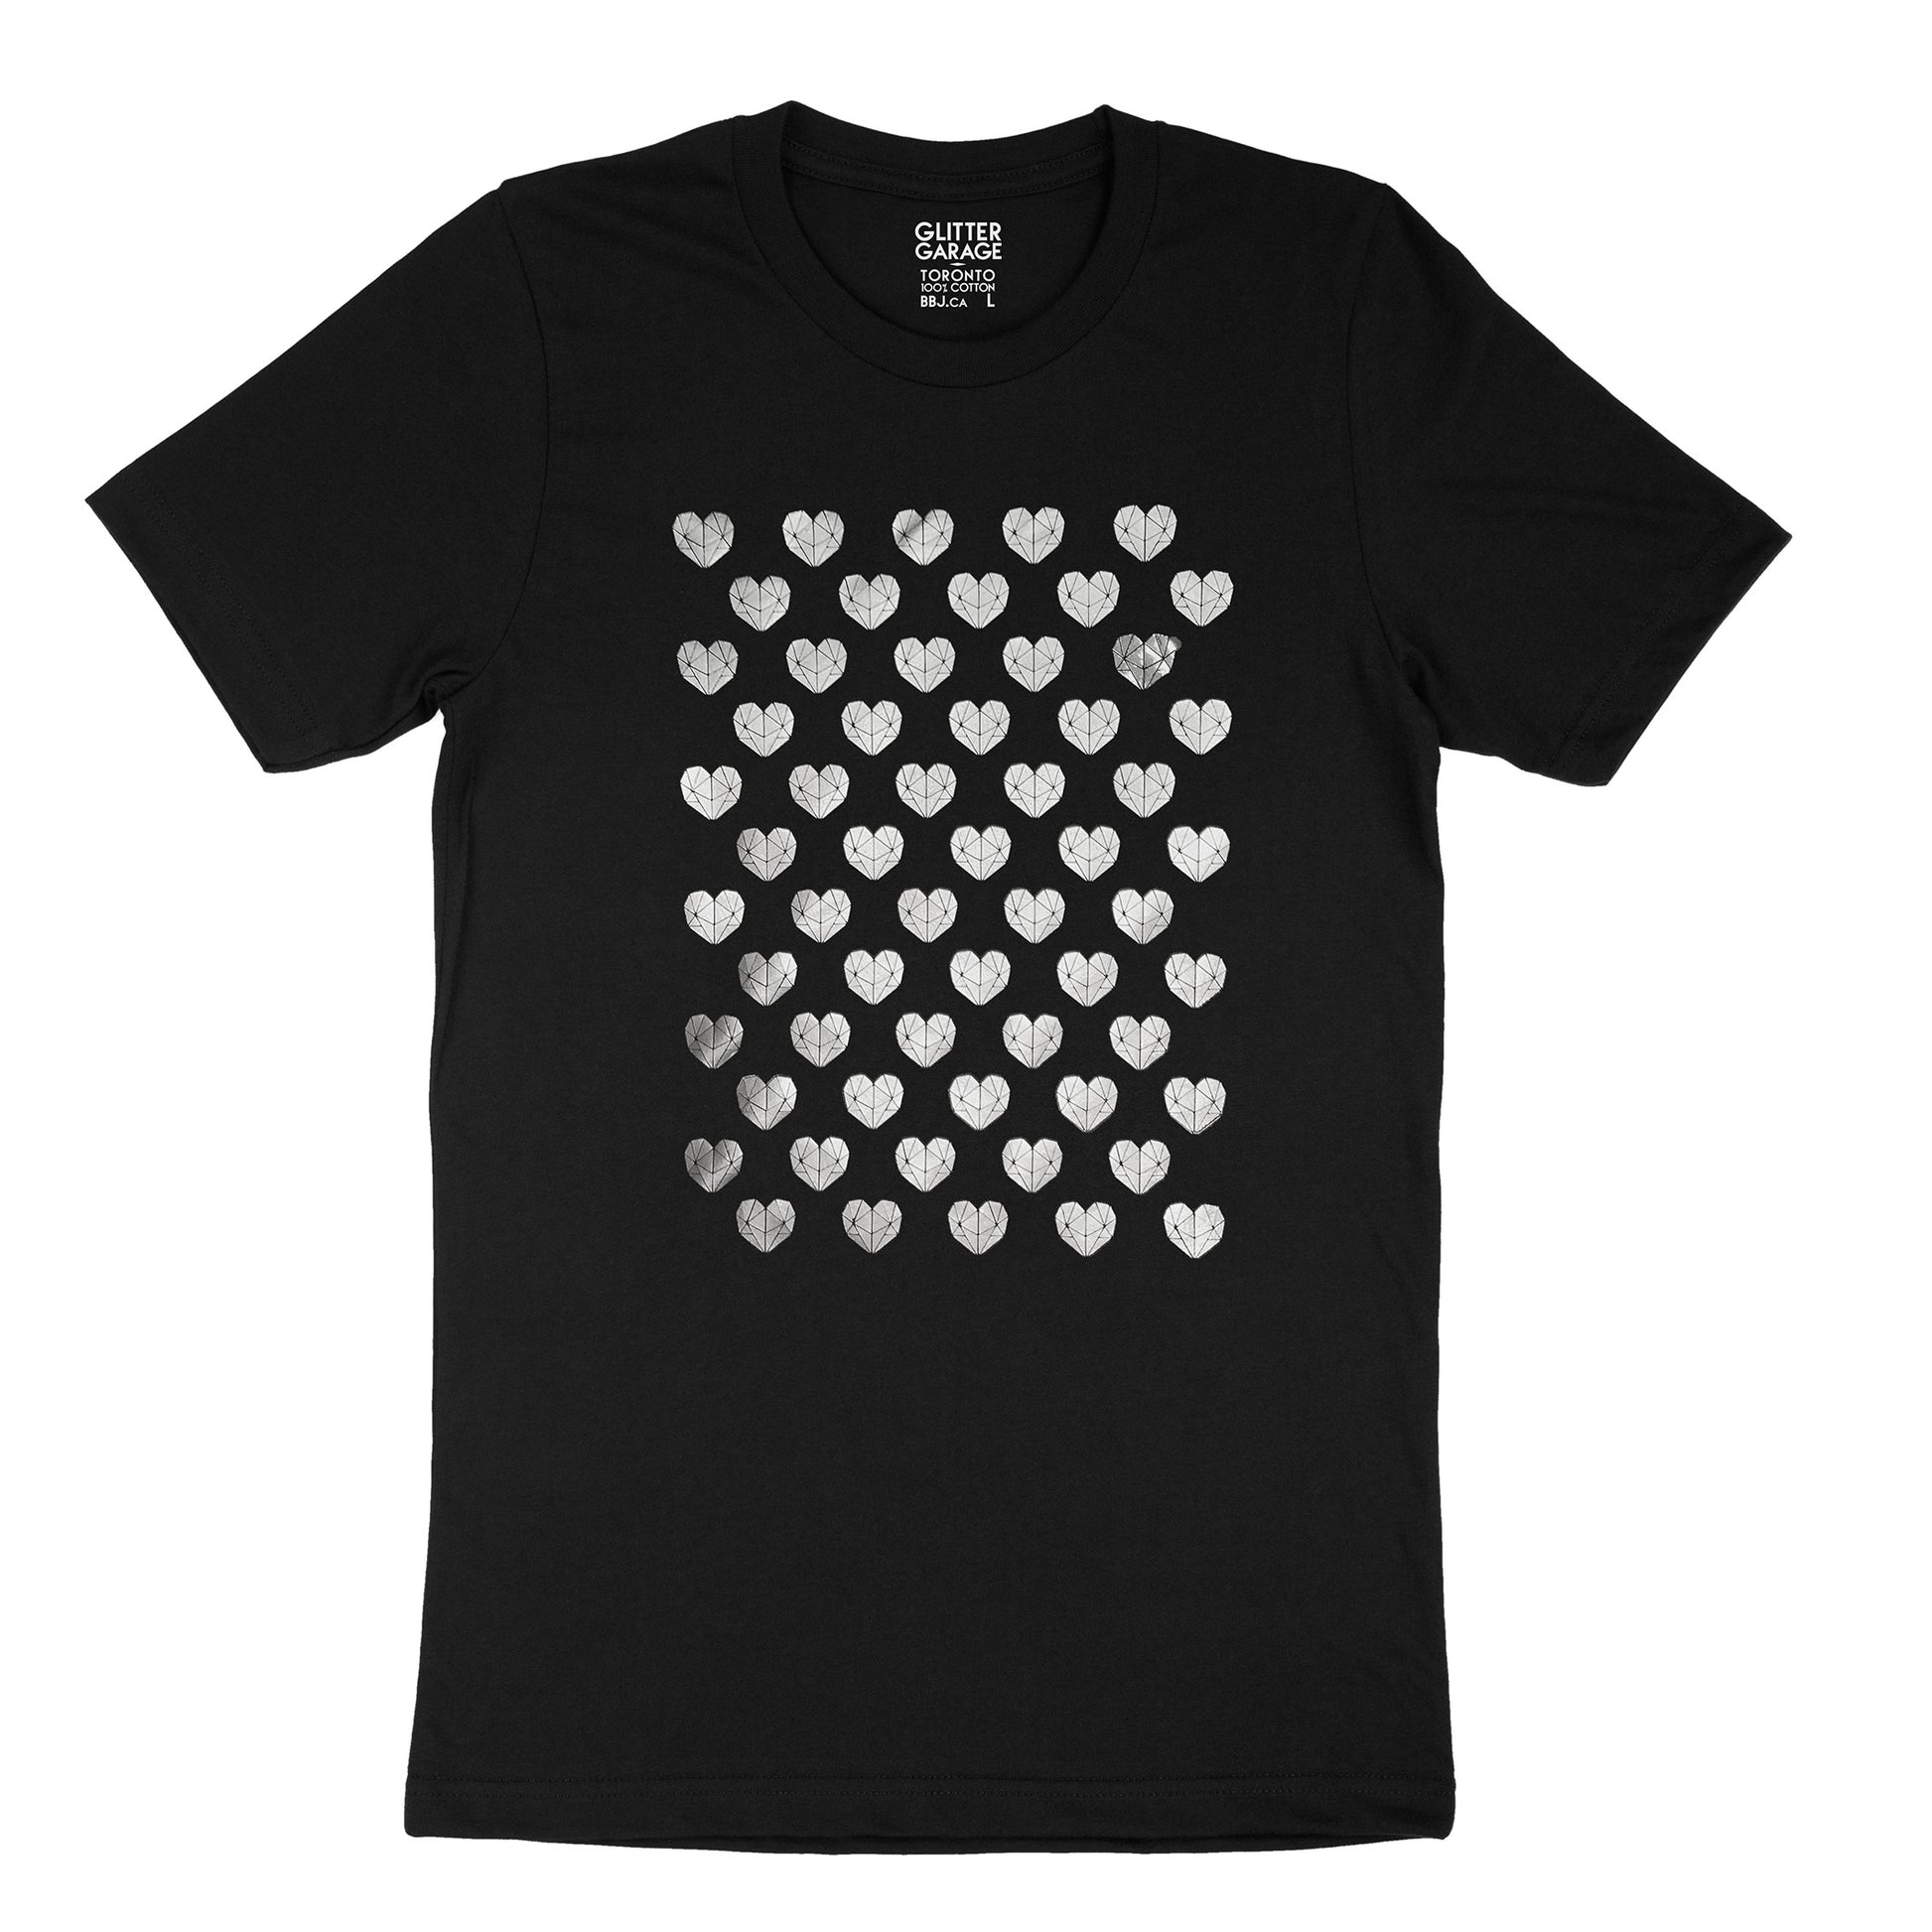 Many Hearts customizable tee - black unisex tee with 60 hearts  - silver matte, metallic by BBJ / Glitter Garage